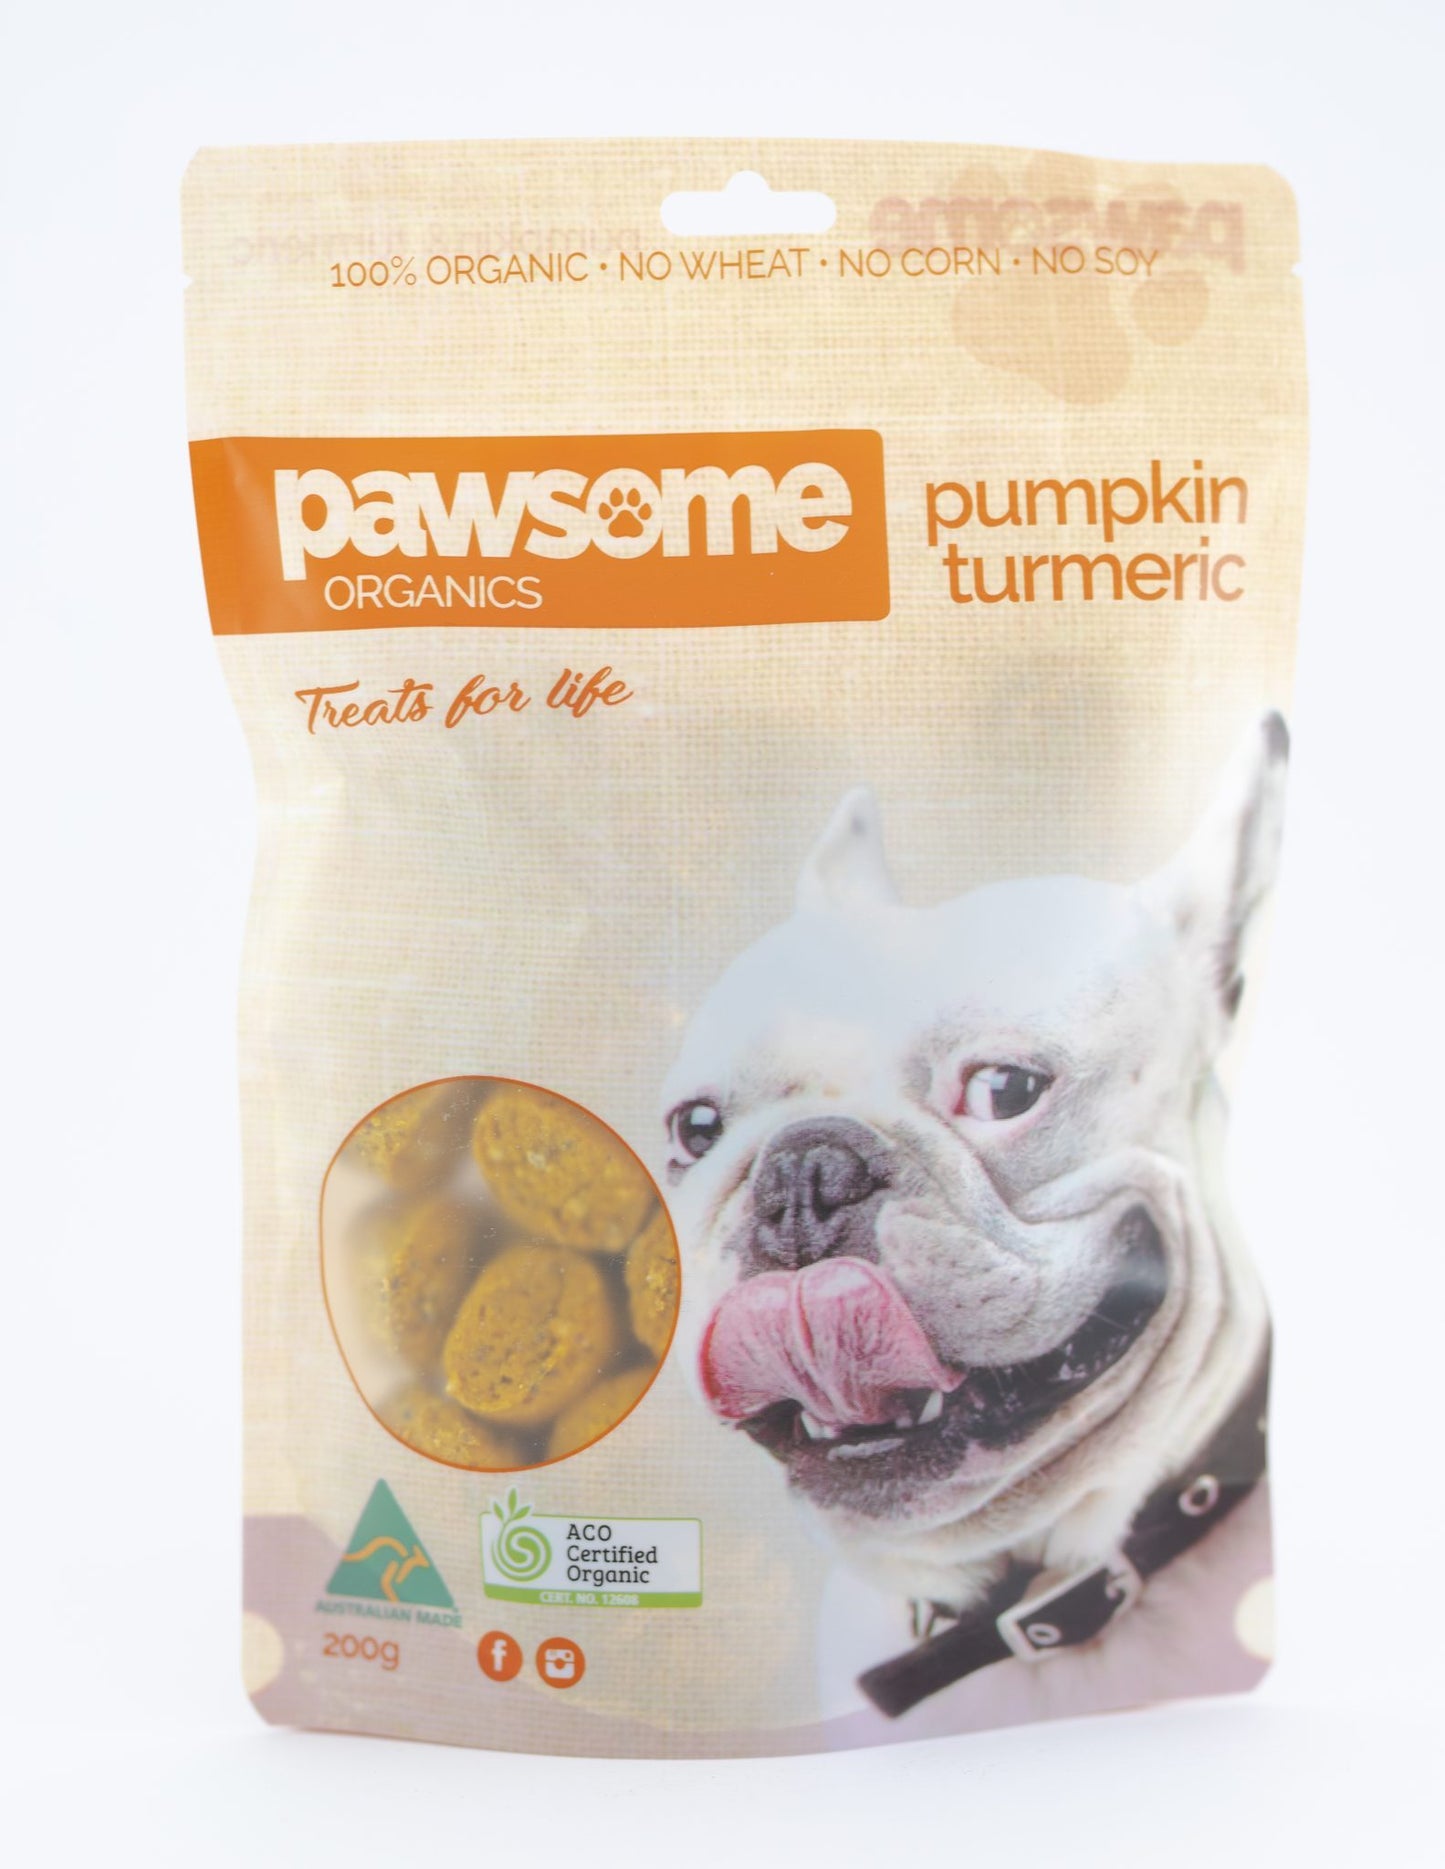 Pawsome Organics - Organic Pumpkin and Turmeric Treats